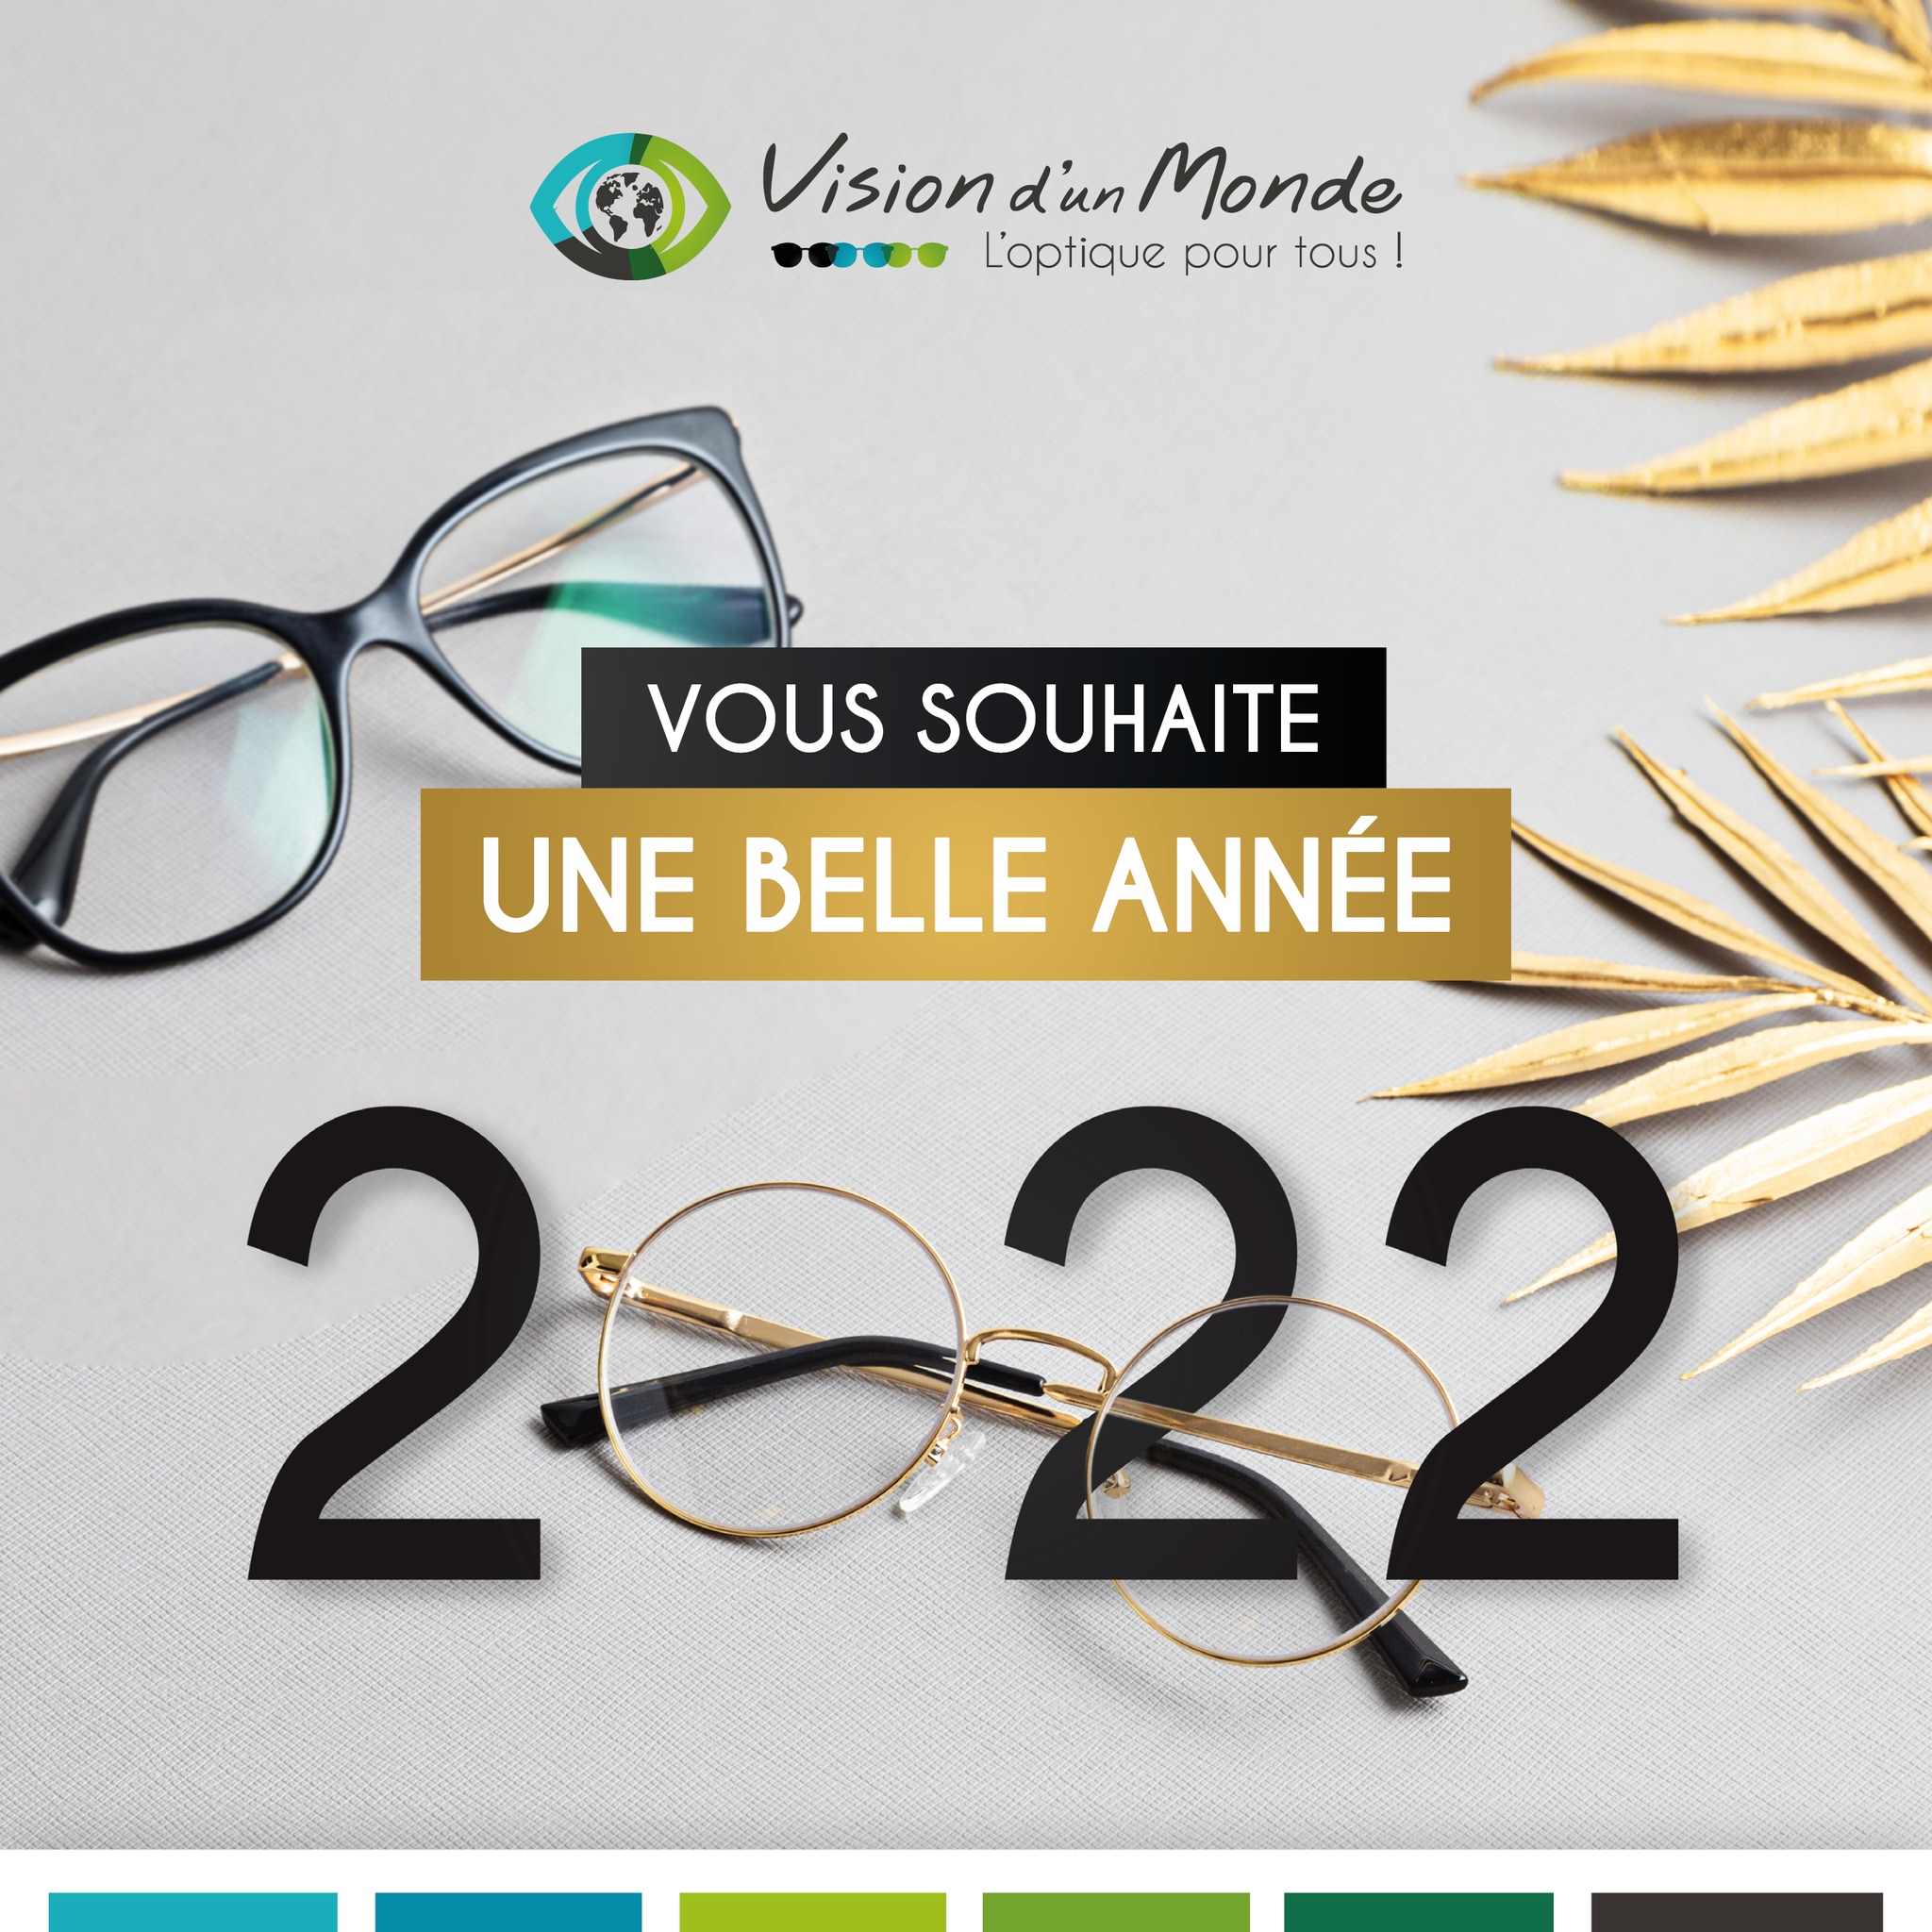 Vision Monde Belle Annee 2022